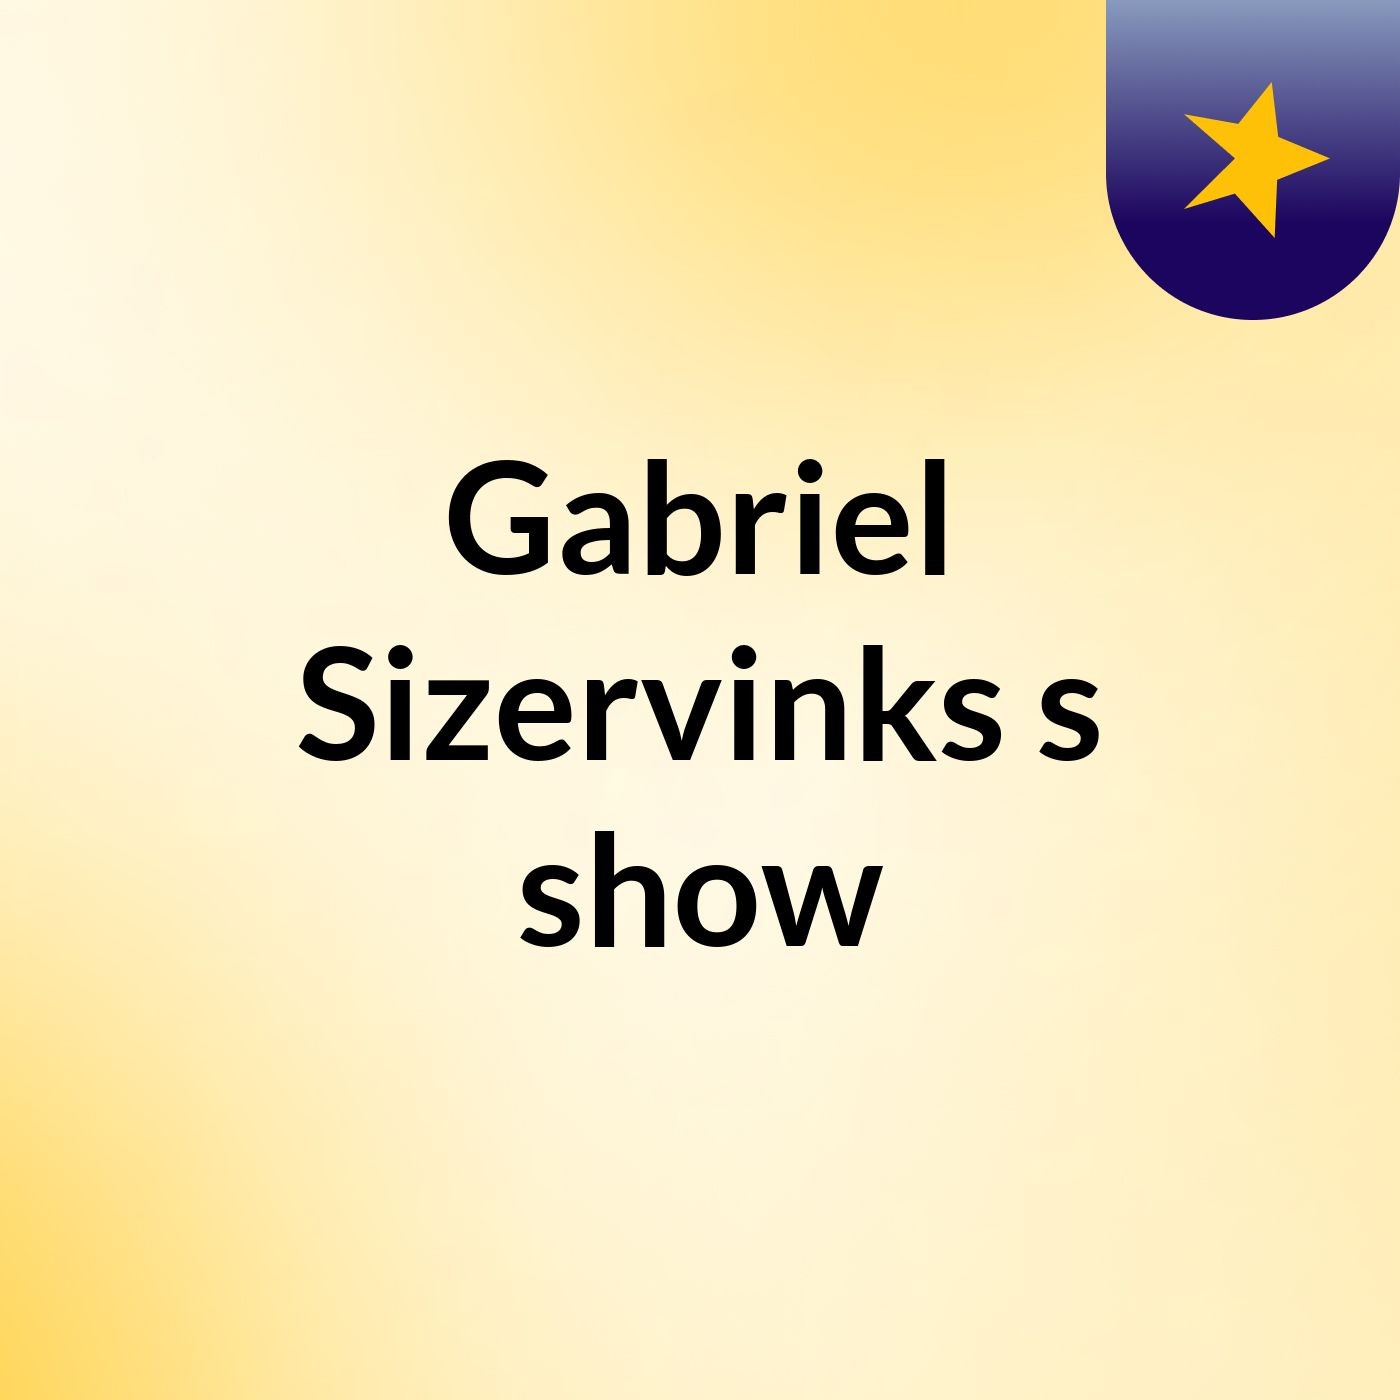 Gabriel Sizervinks's show